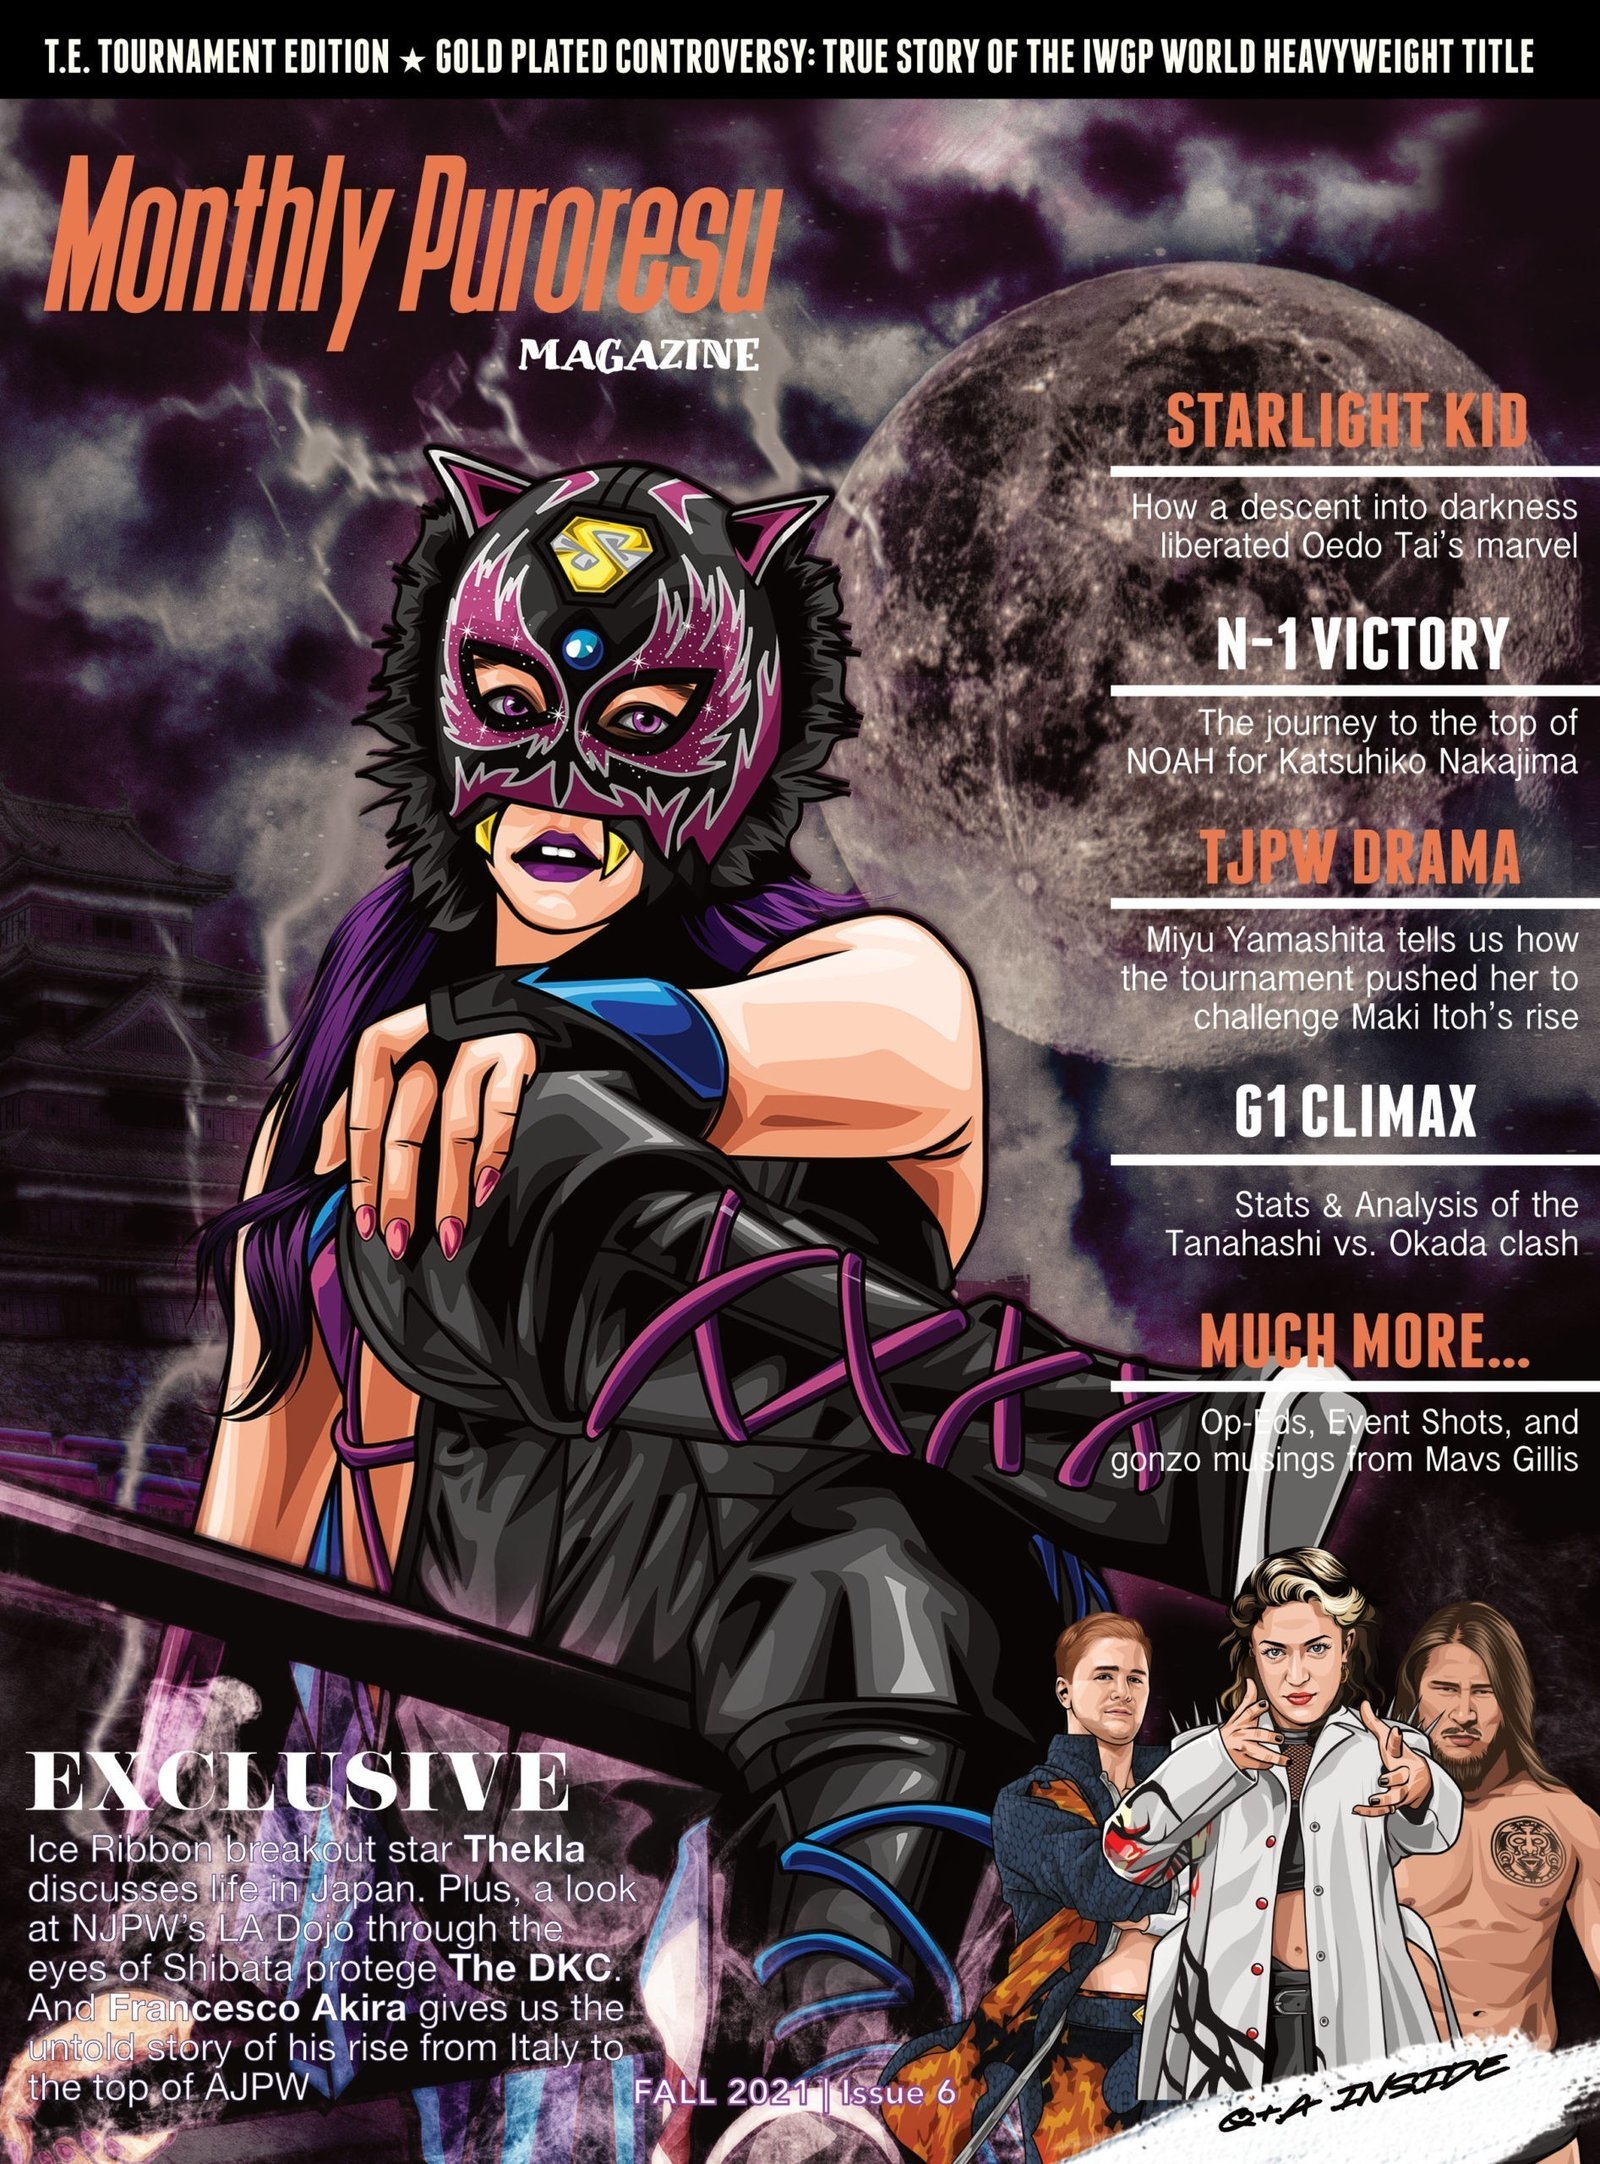 Monthly Puroresu Issue 6 Cover